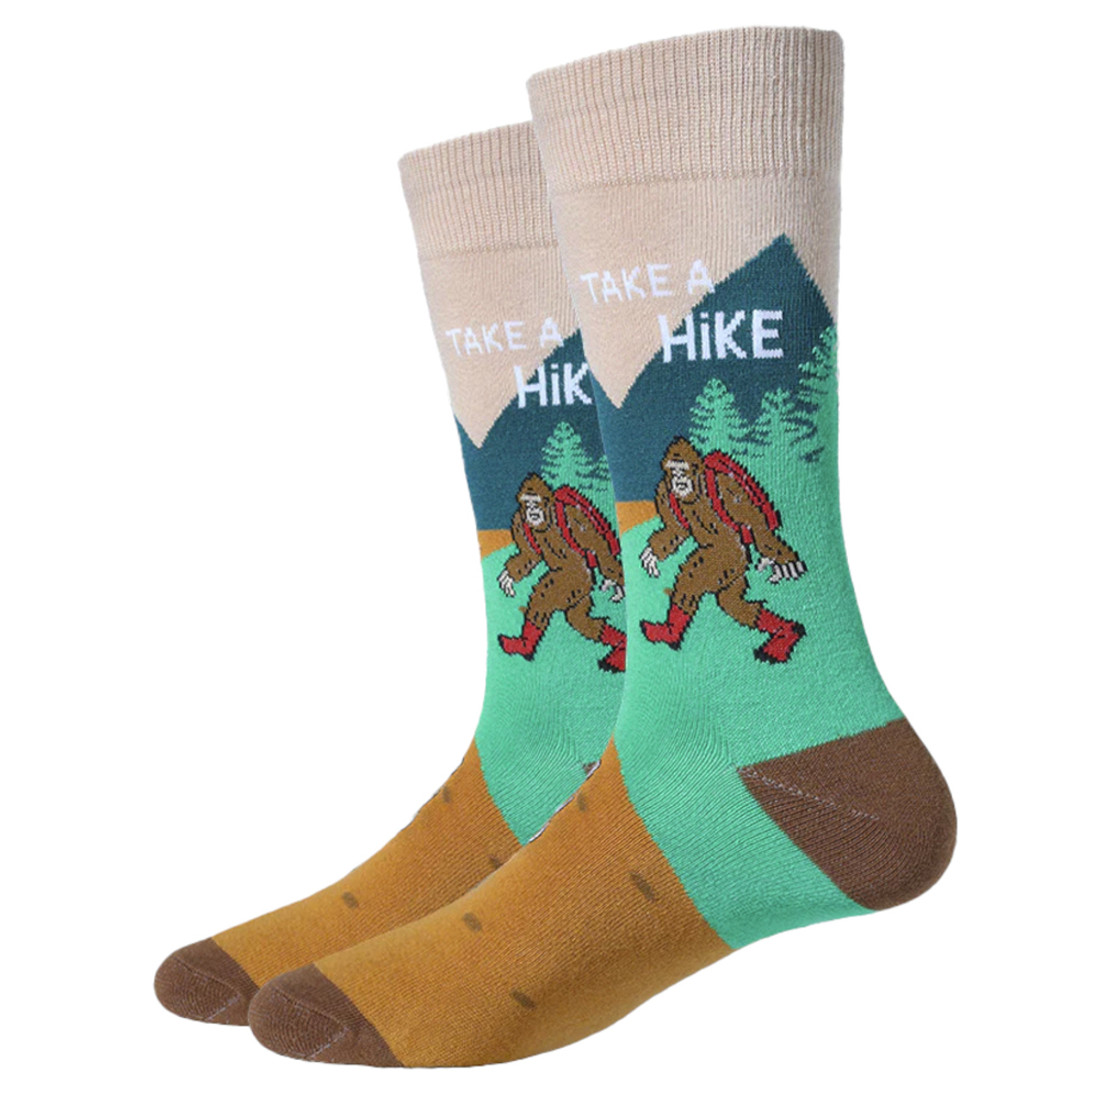 Take A Hike Bigfoot Men's Socks